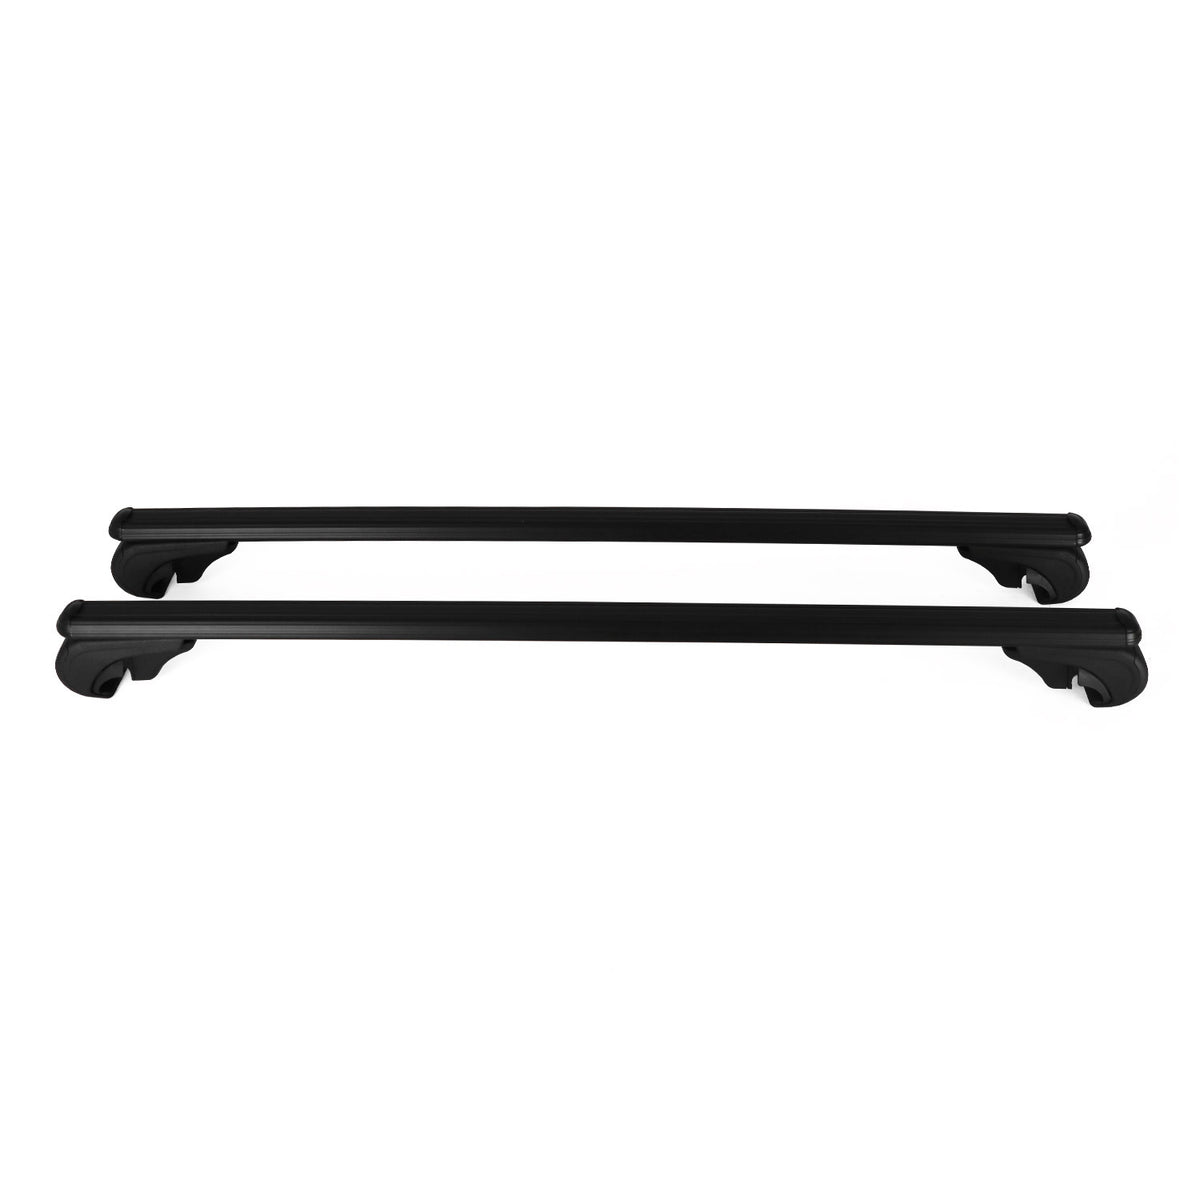 Roof rack for Daihatsu Terios 2006-2013 luggage rack base rack aluminum black 2x